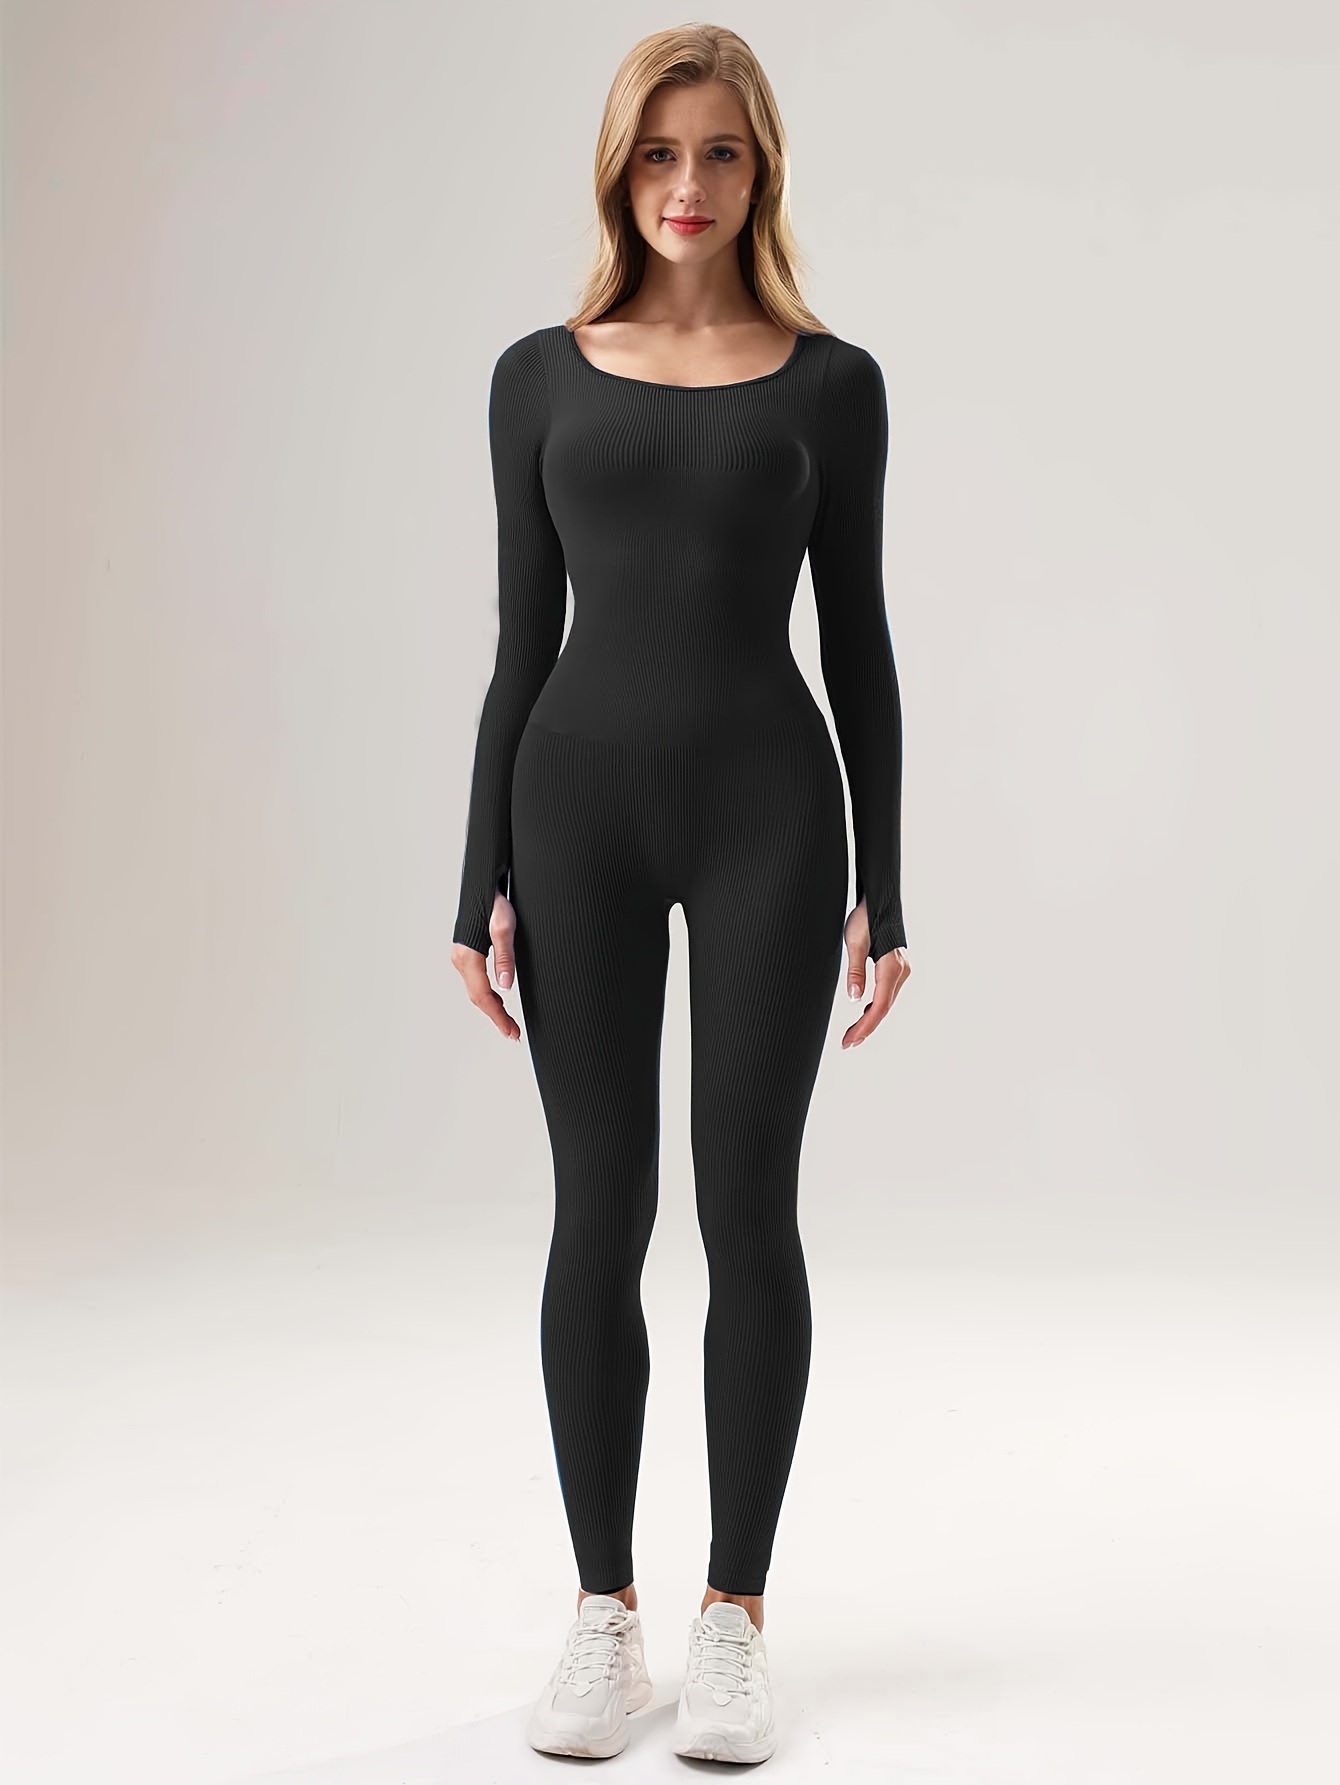 Black and White Sports Jumpsuit/ Women Printed Bodysuit/ Yoga